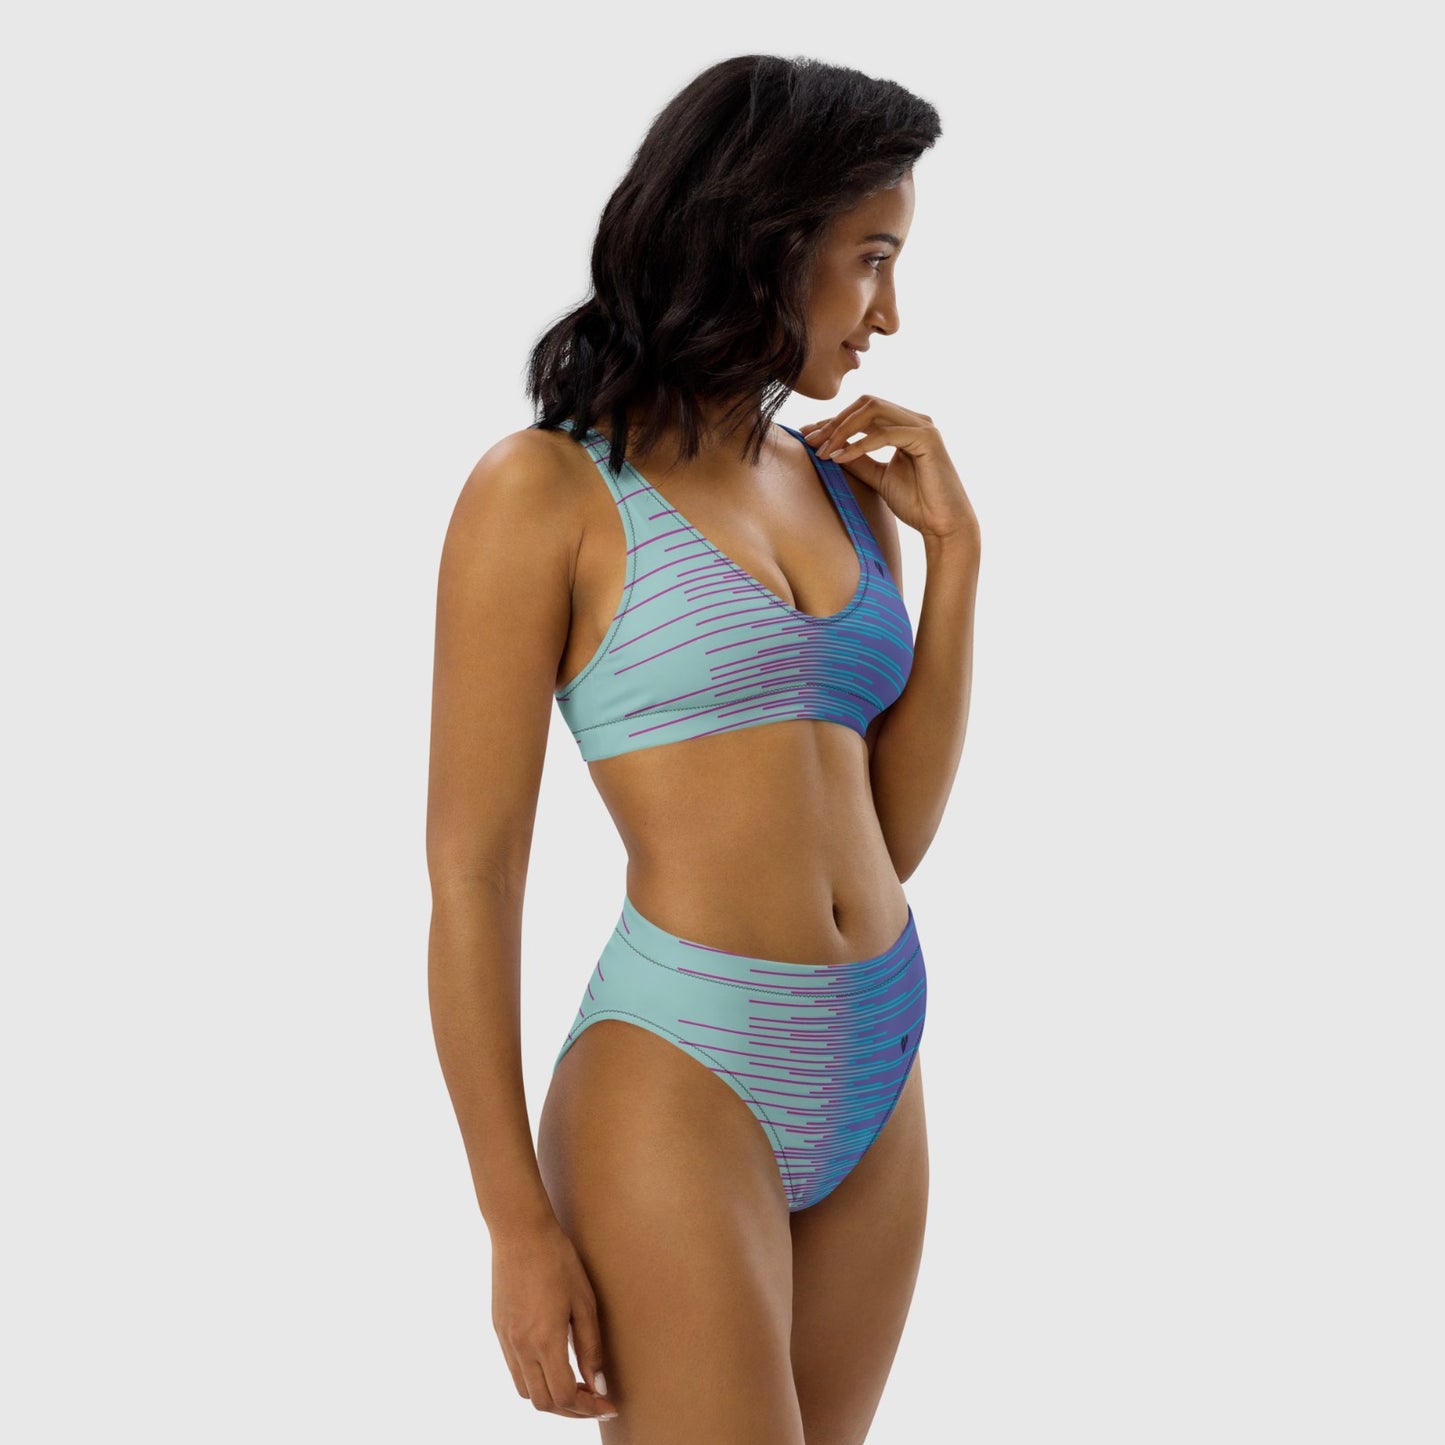 Dual Tone Beach Bikini for Women, CRiZ AMOR Collection